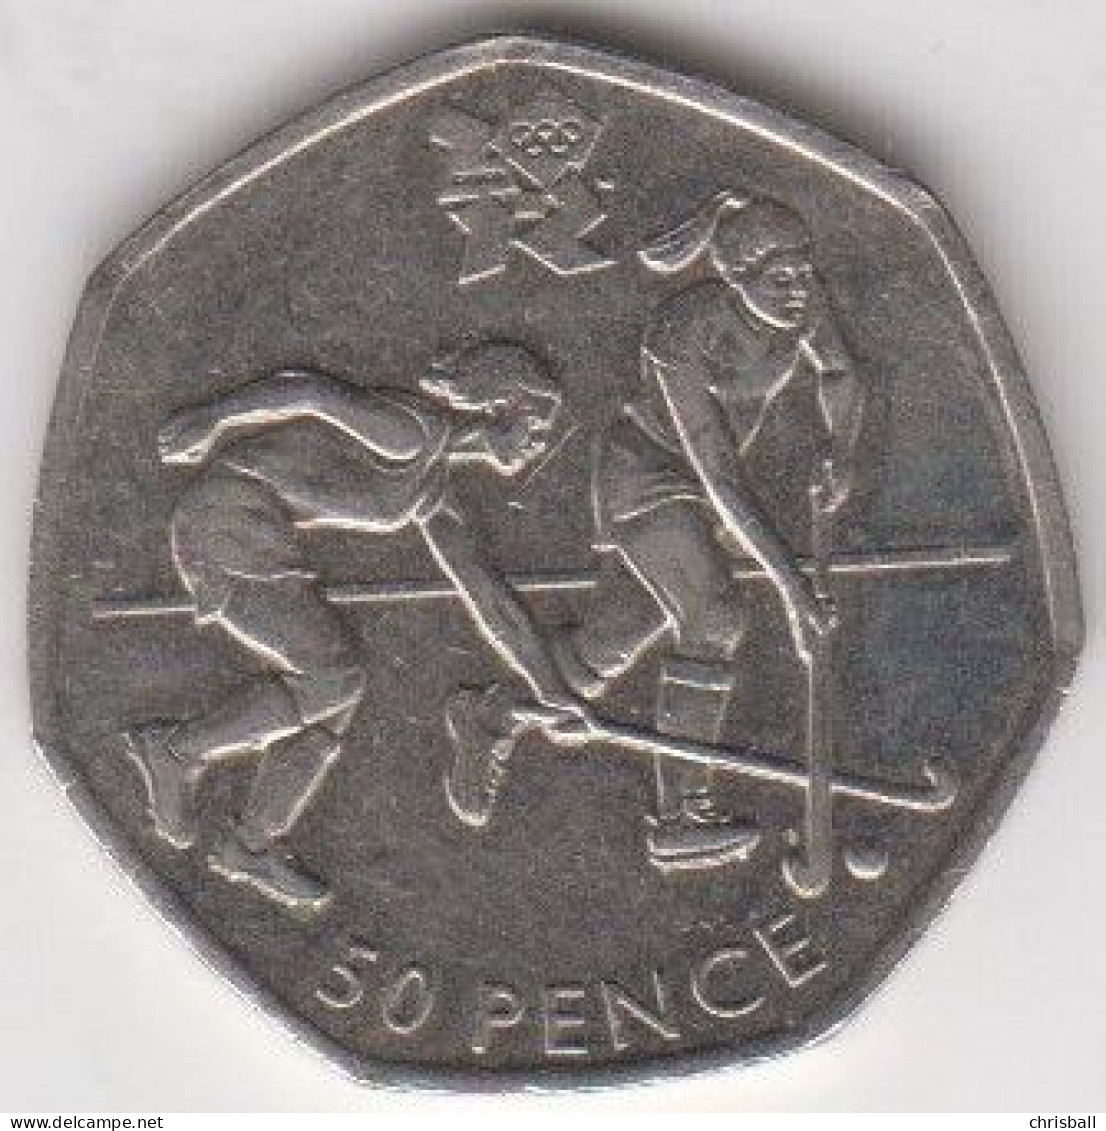 Great Britain UK 50p Coin Hockey  2011 (Small Format) Circulated - 50 Pence